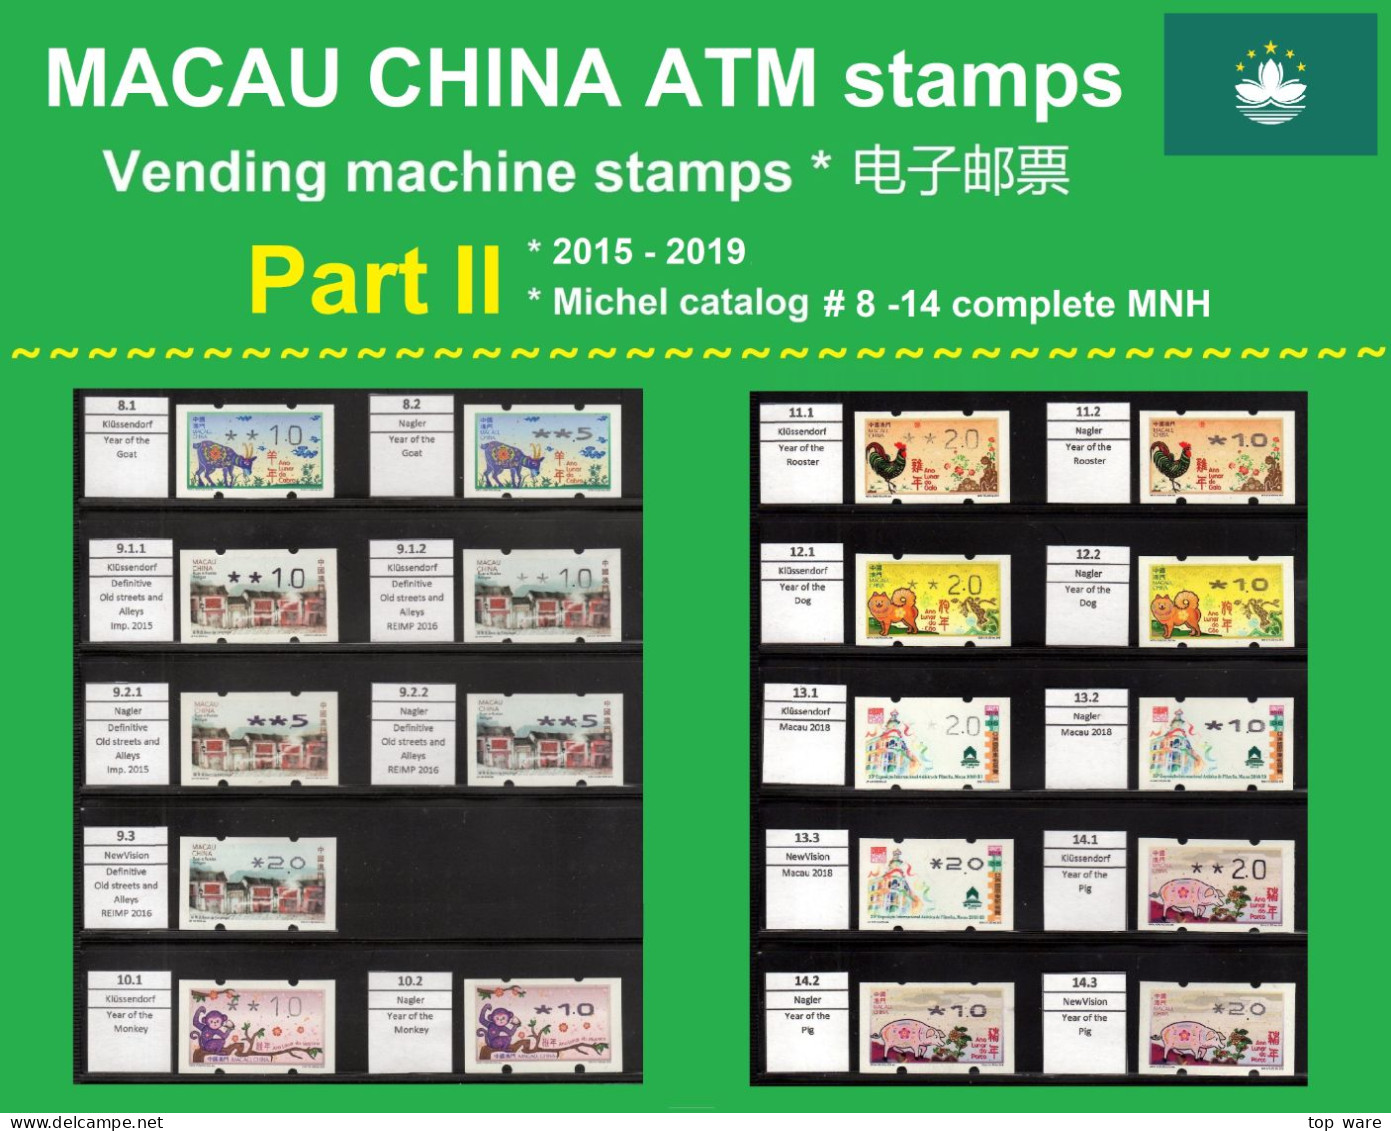 Macau China ATM Sammlung Part II / 2015-2019 MNH / Klussendorf Nagler Frama CVP Automatenmarken - Distributors